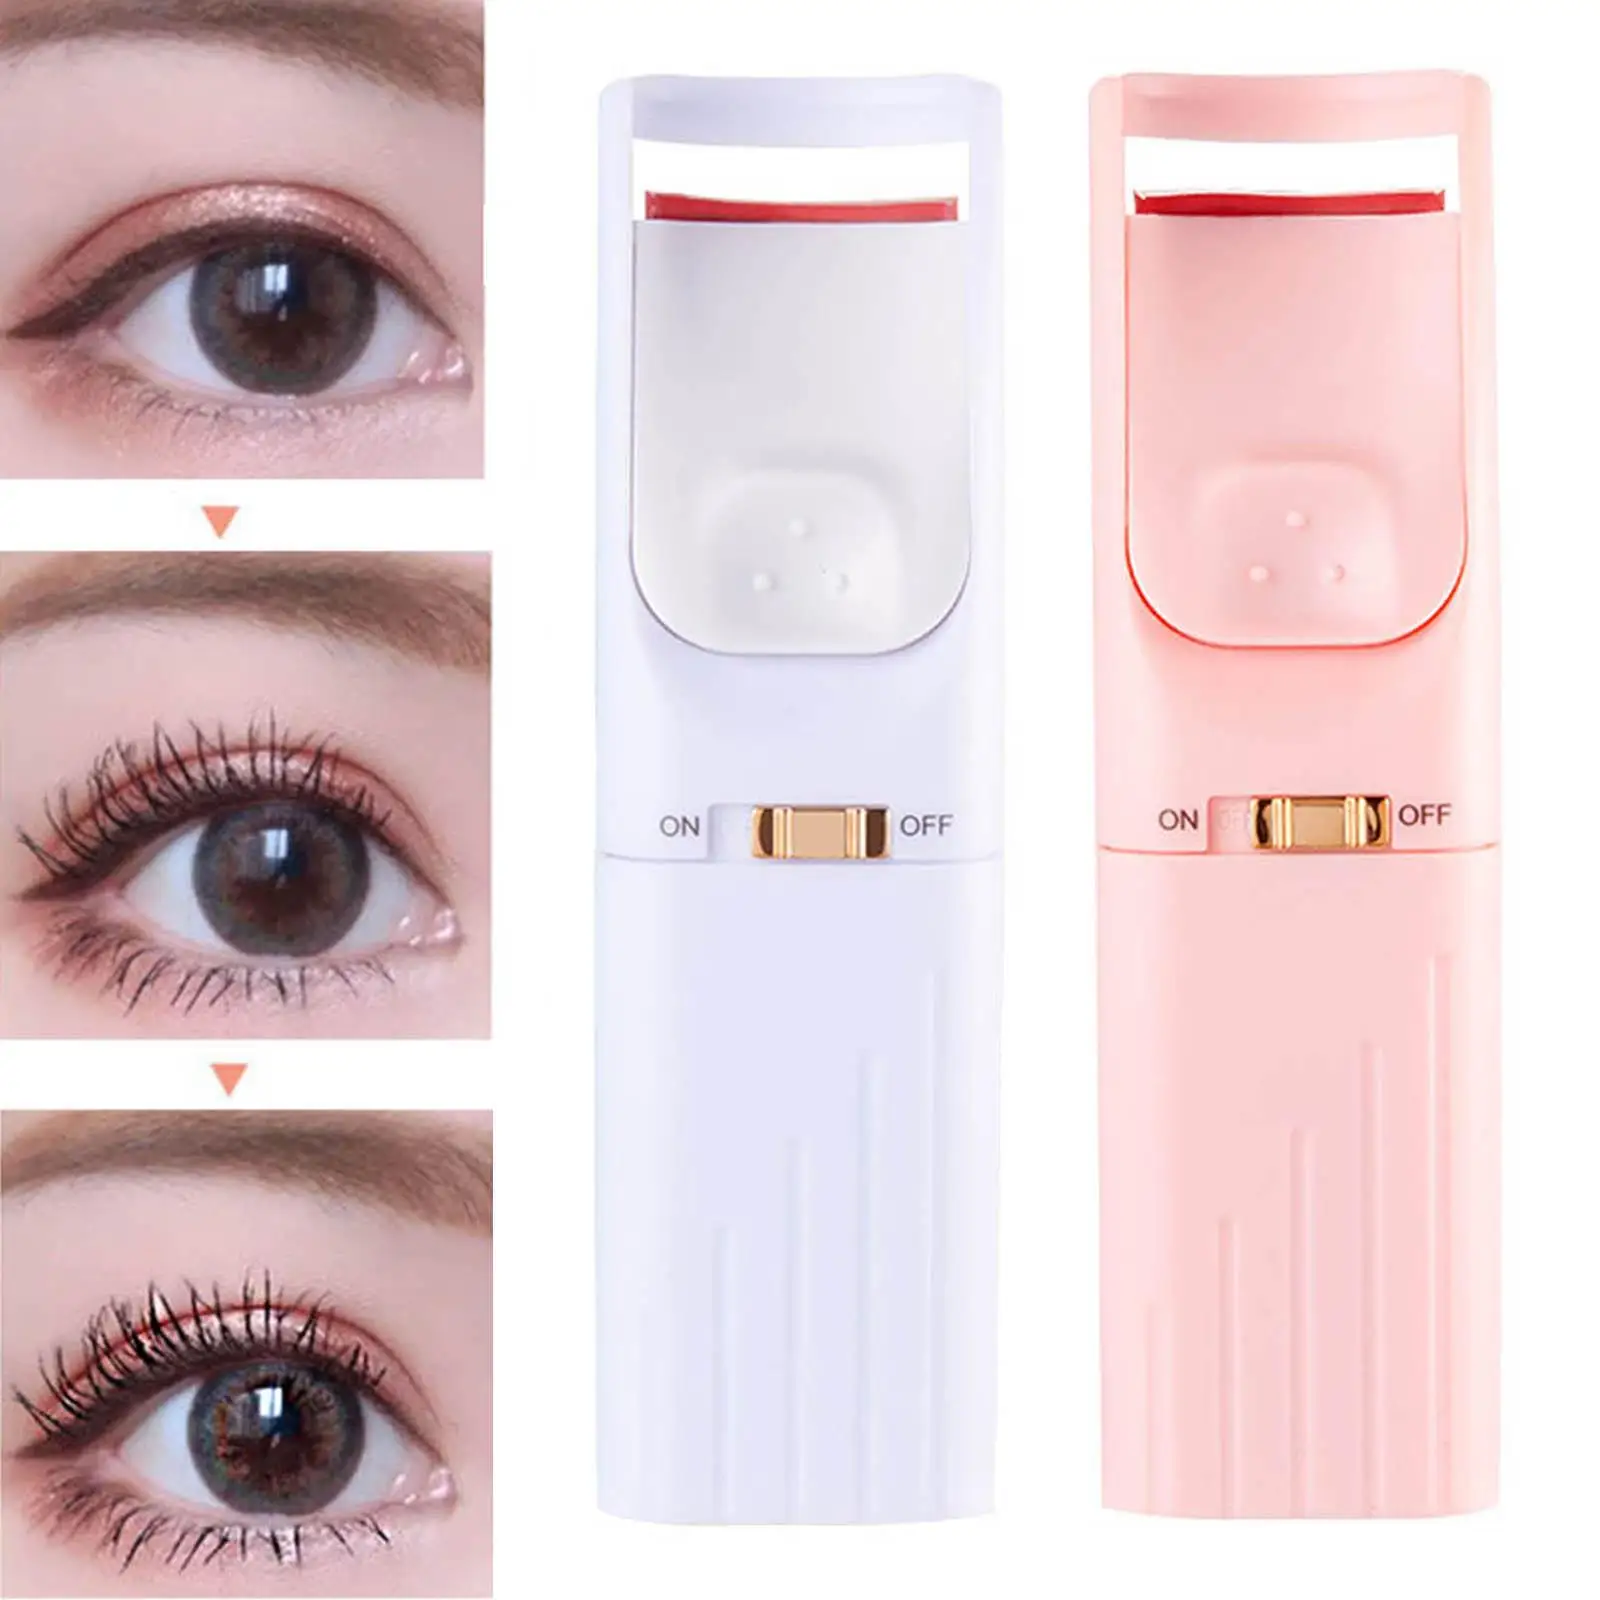 Electric Eyelash Curler for Women USB Charging, 40°C Intelligent Temperature Control